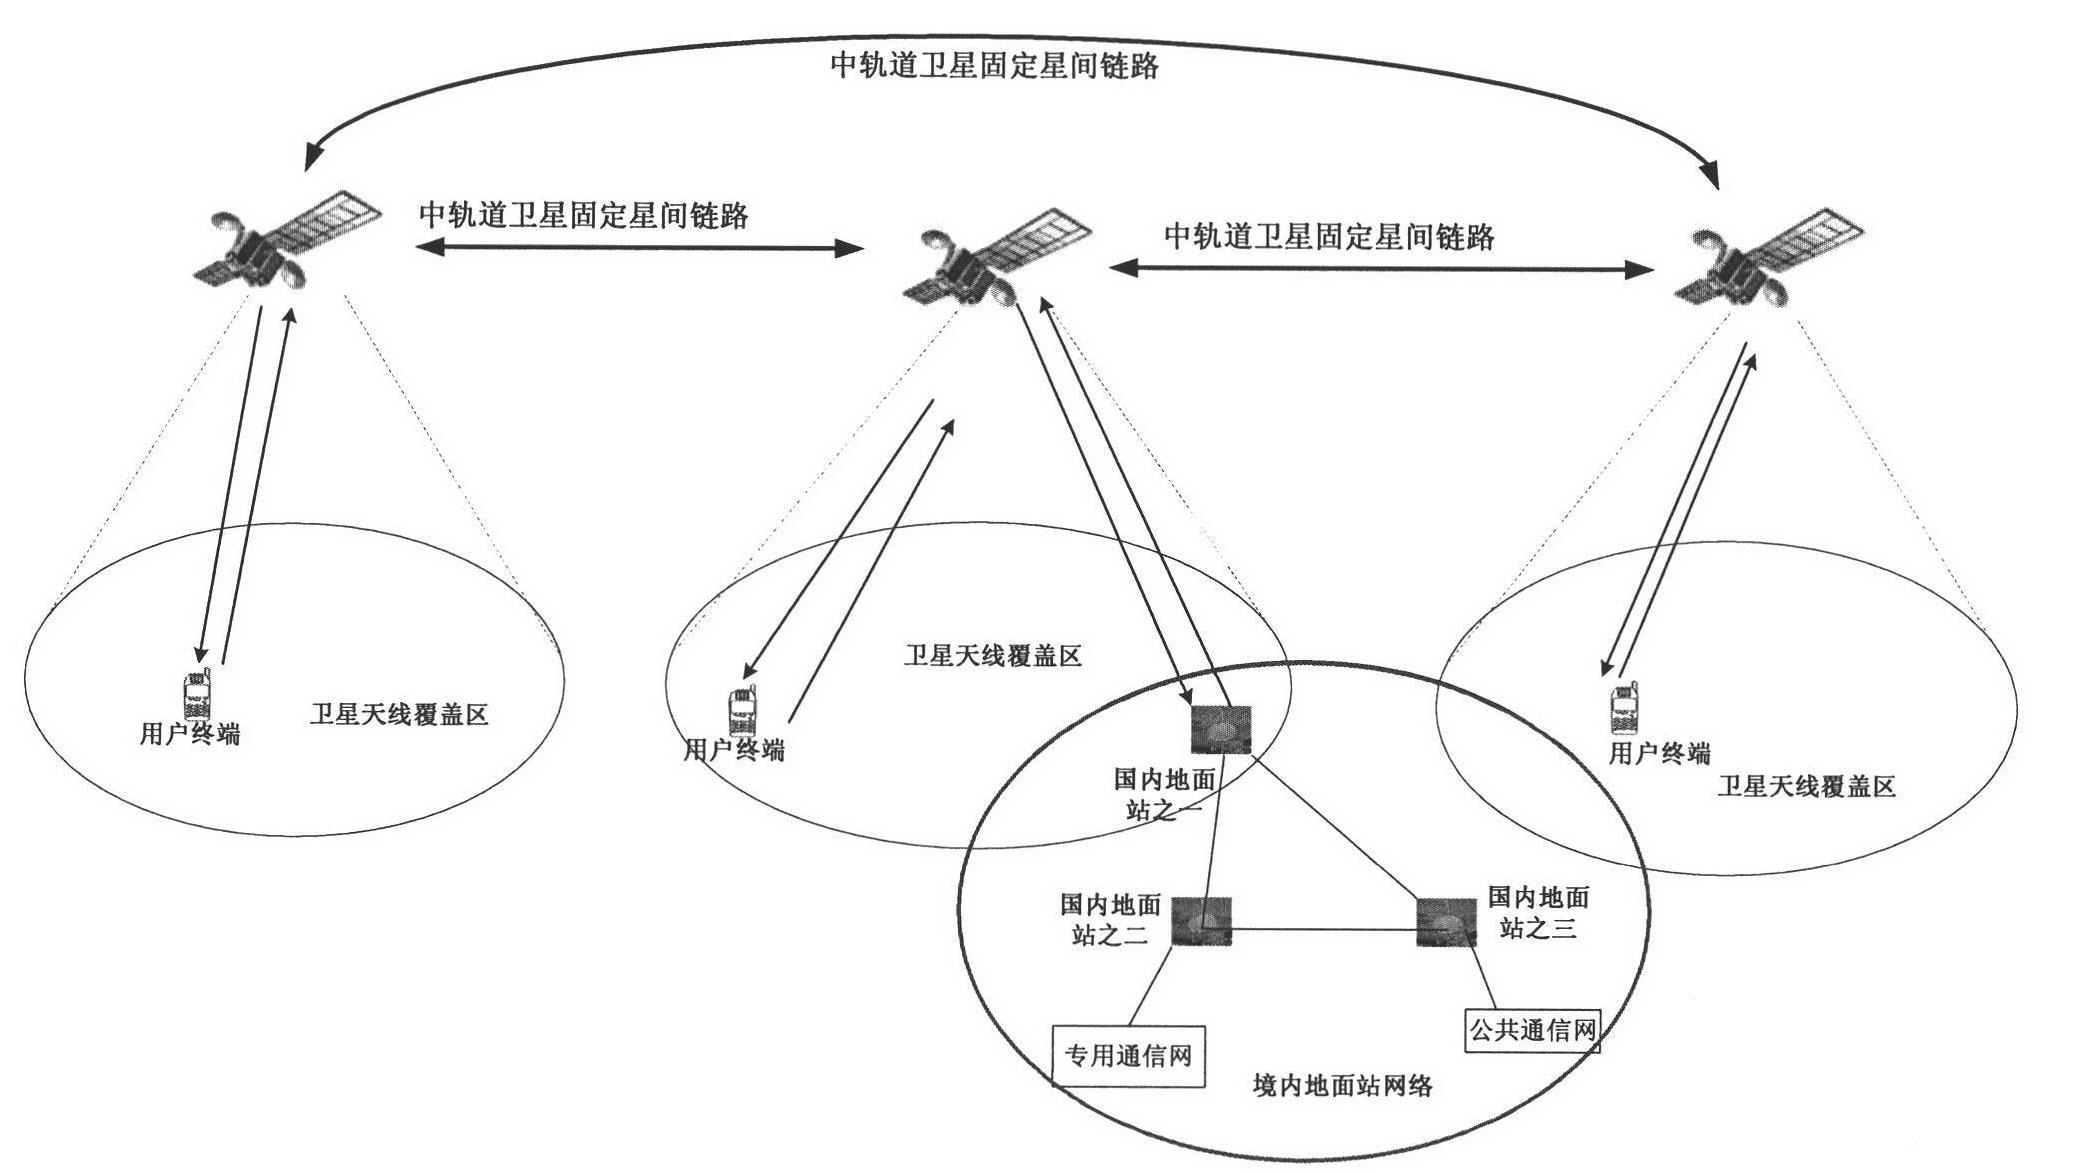 Global satellite communication system and method